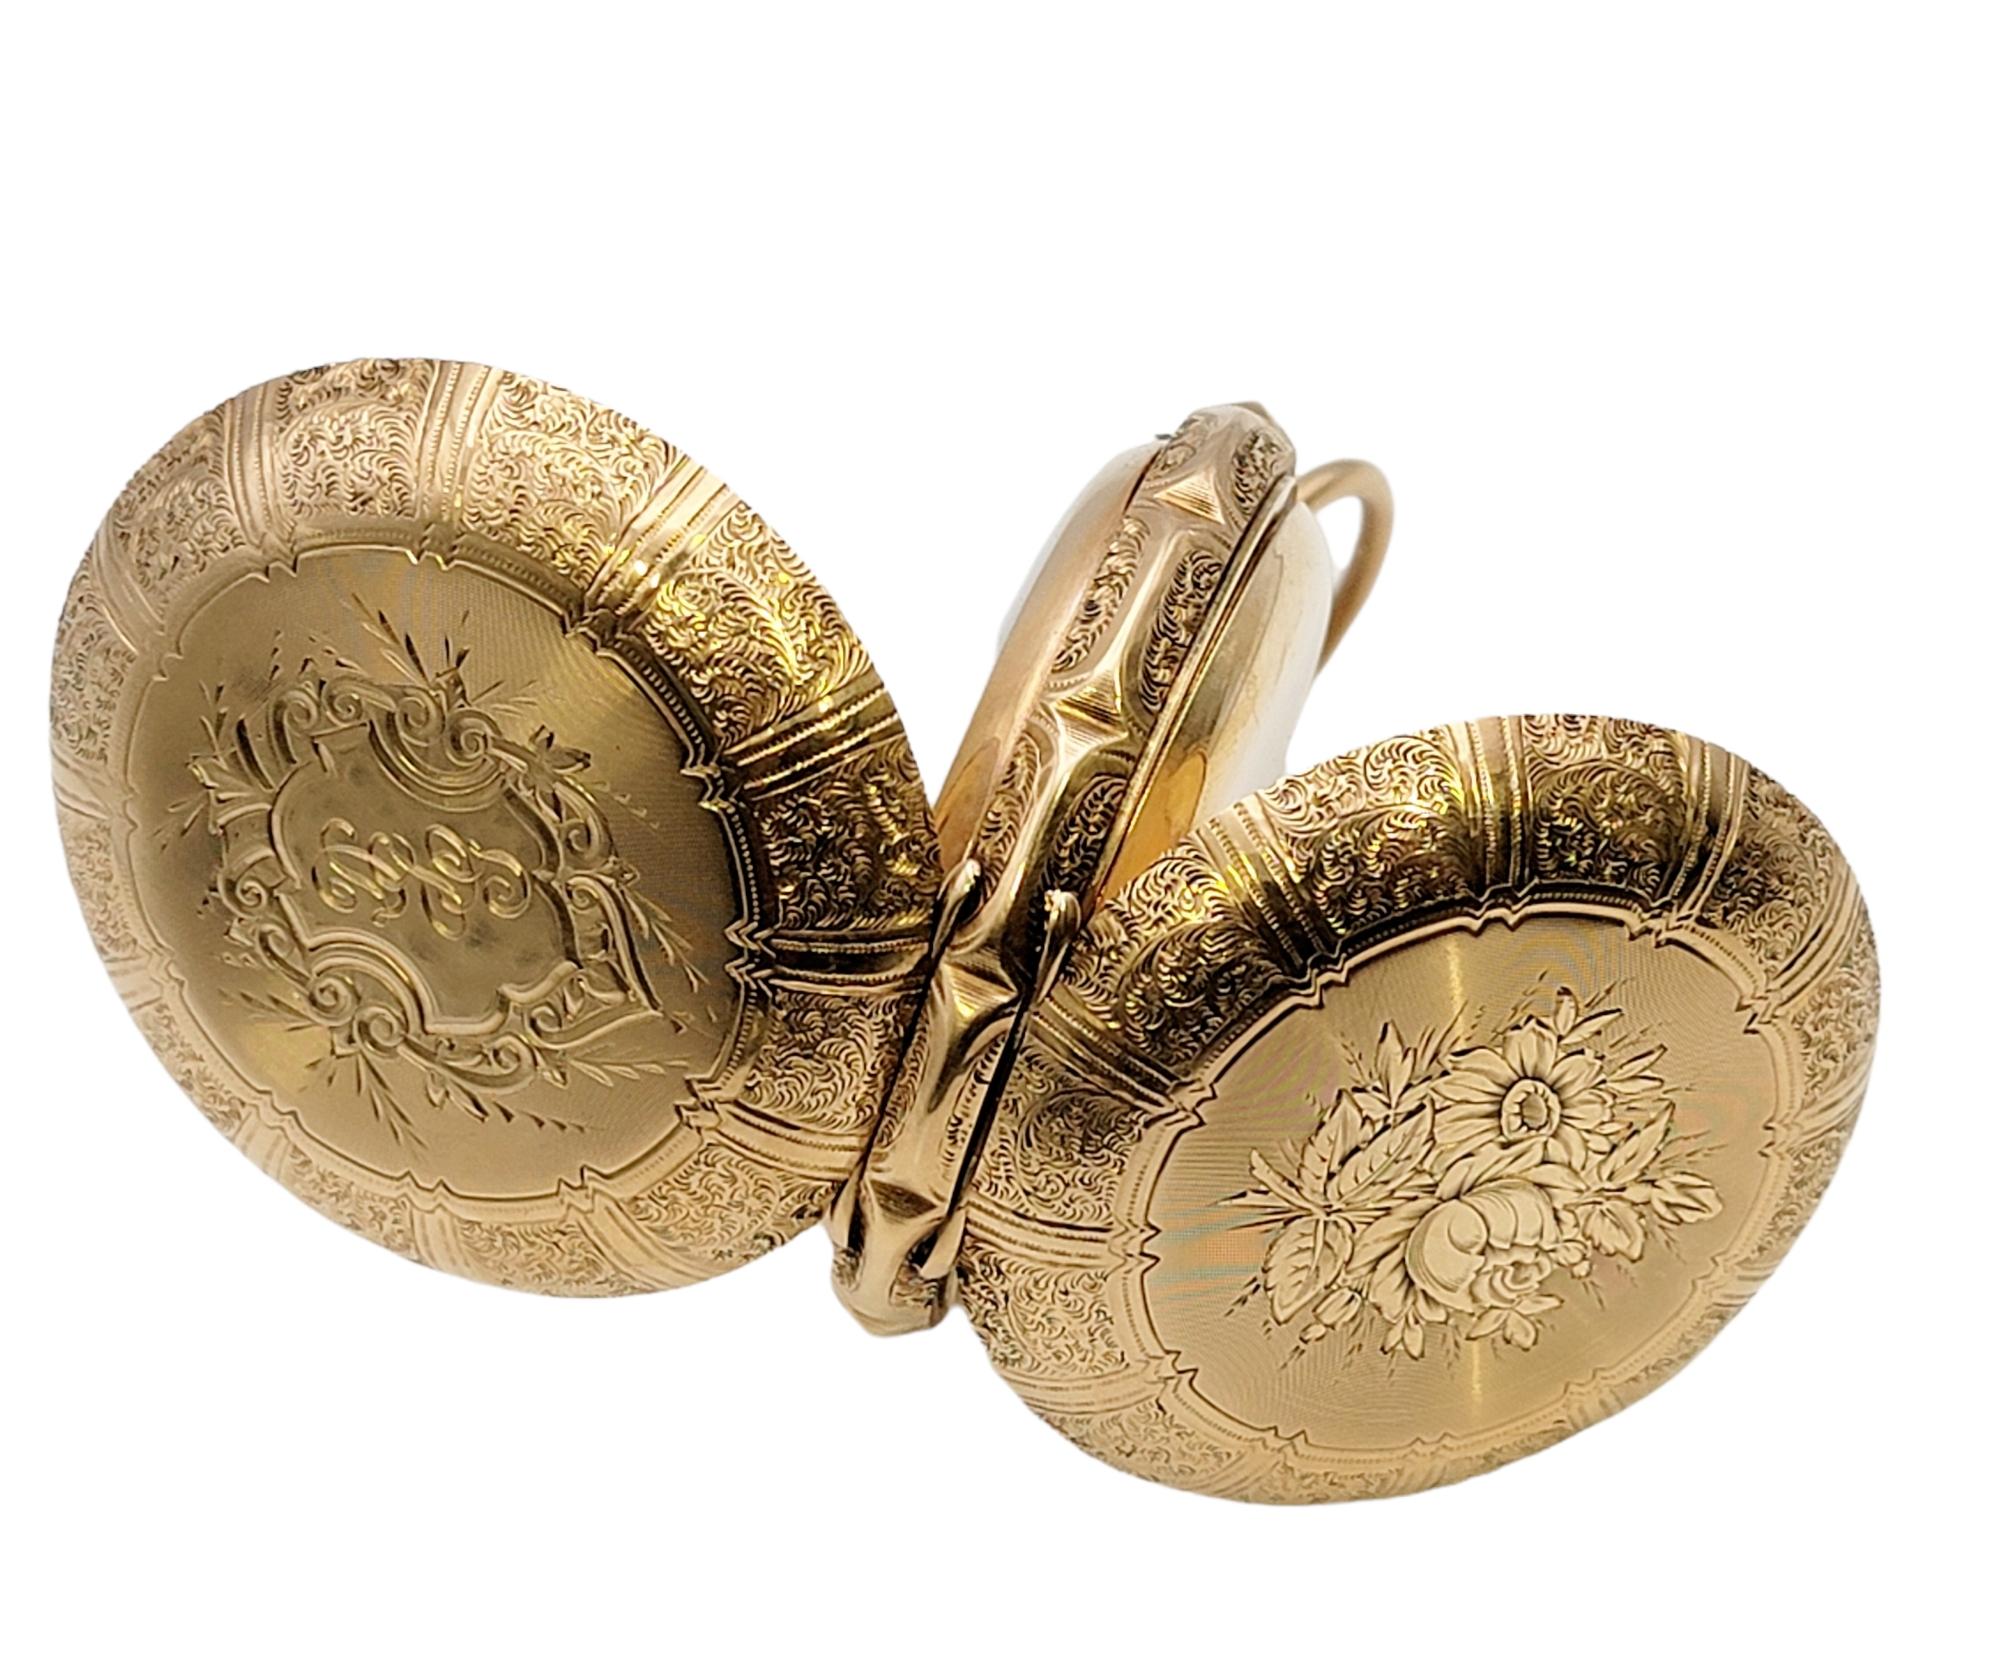 Vintage Waltham 14 Karat Yellow Gold Pocket Watch Circa 1888 Floral Engraving For Sale 3